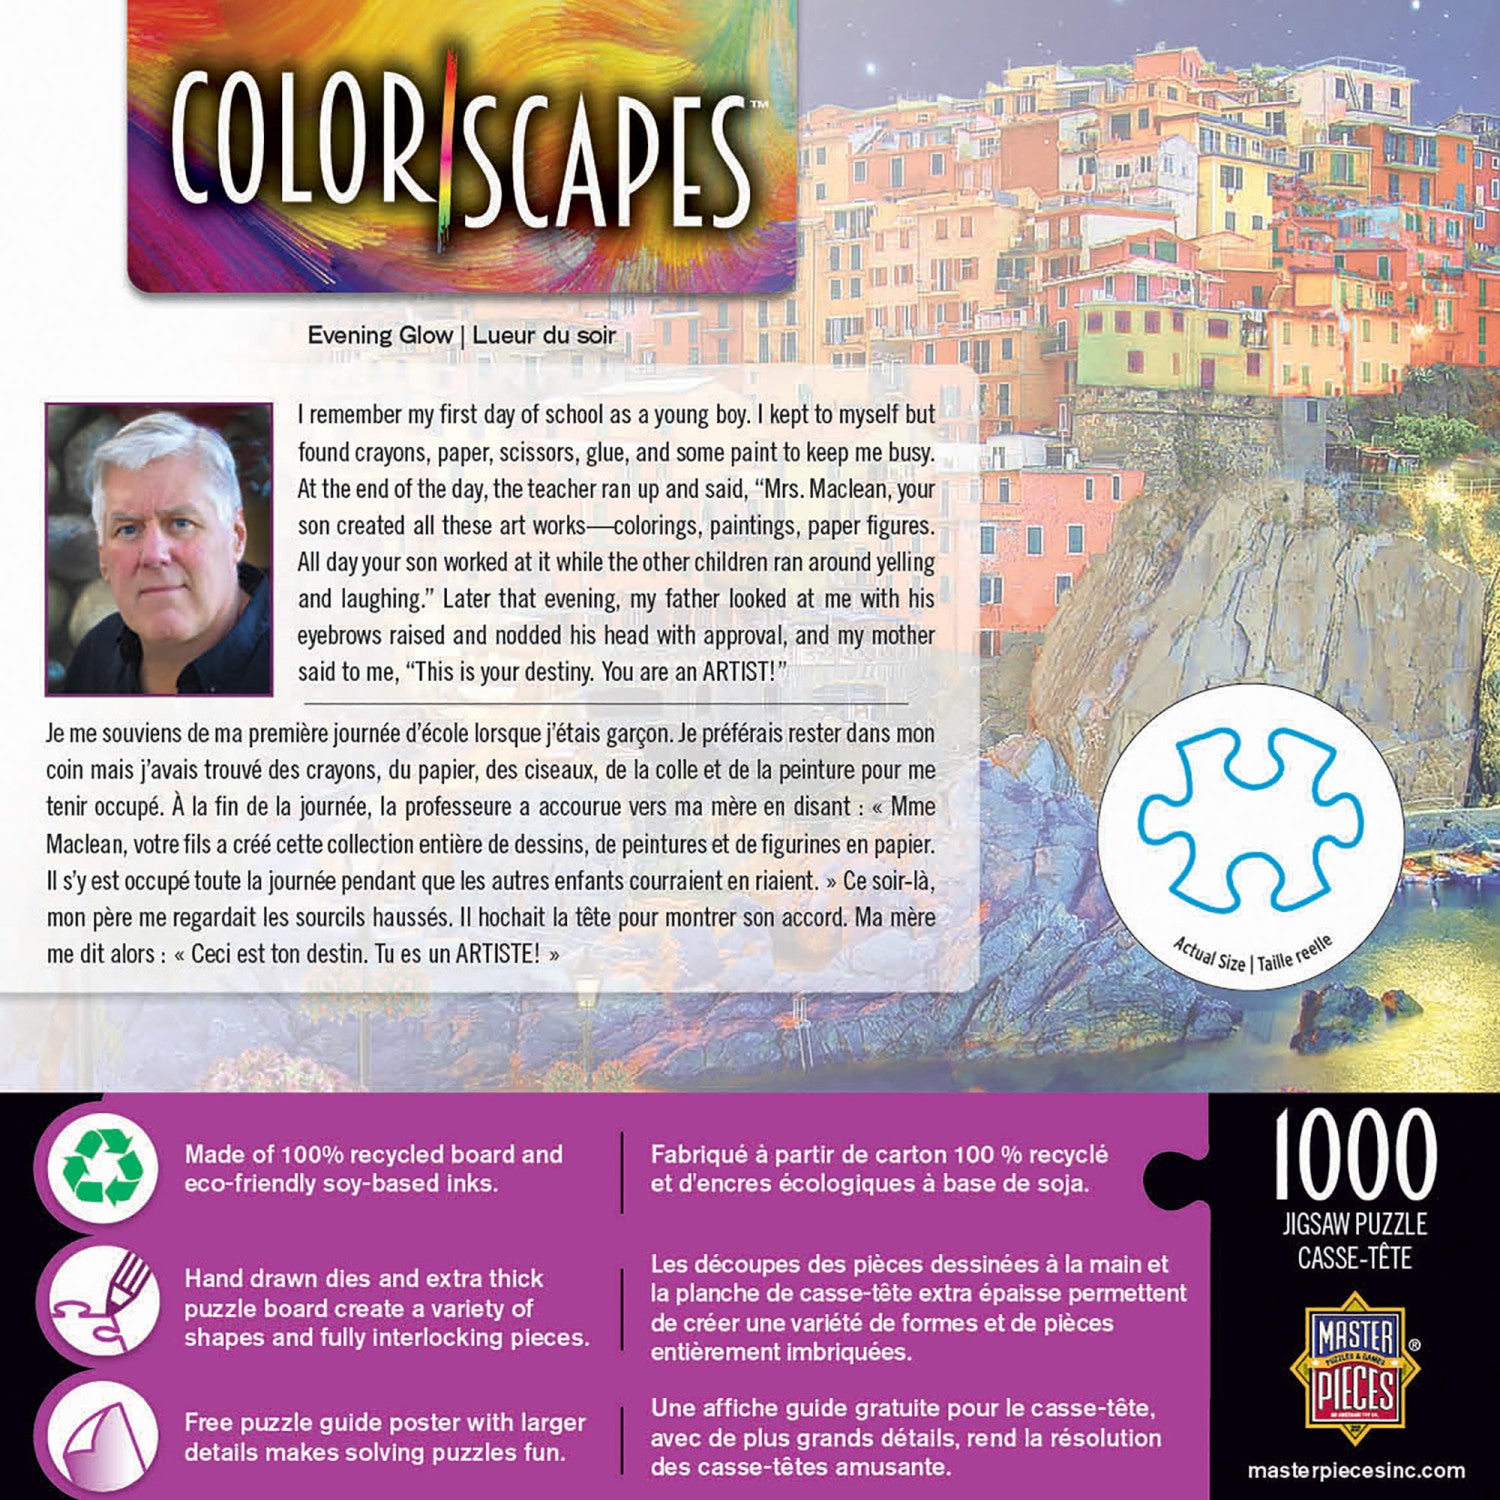 Colorscapes - Evening Glow 1000 Piece Jigsaw Puzzle